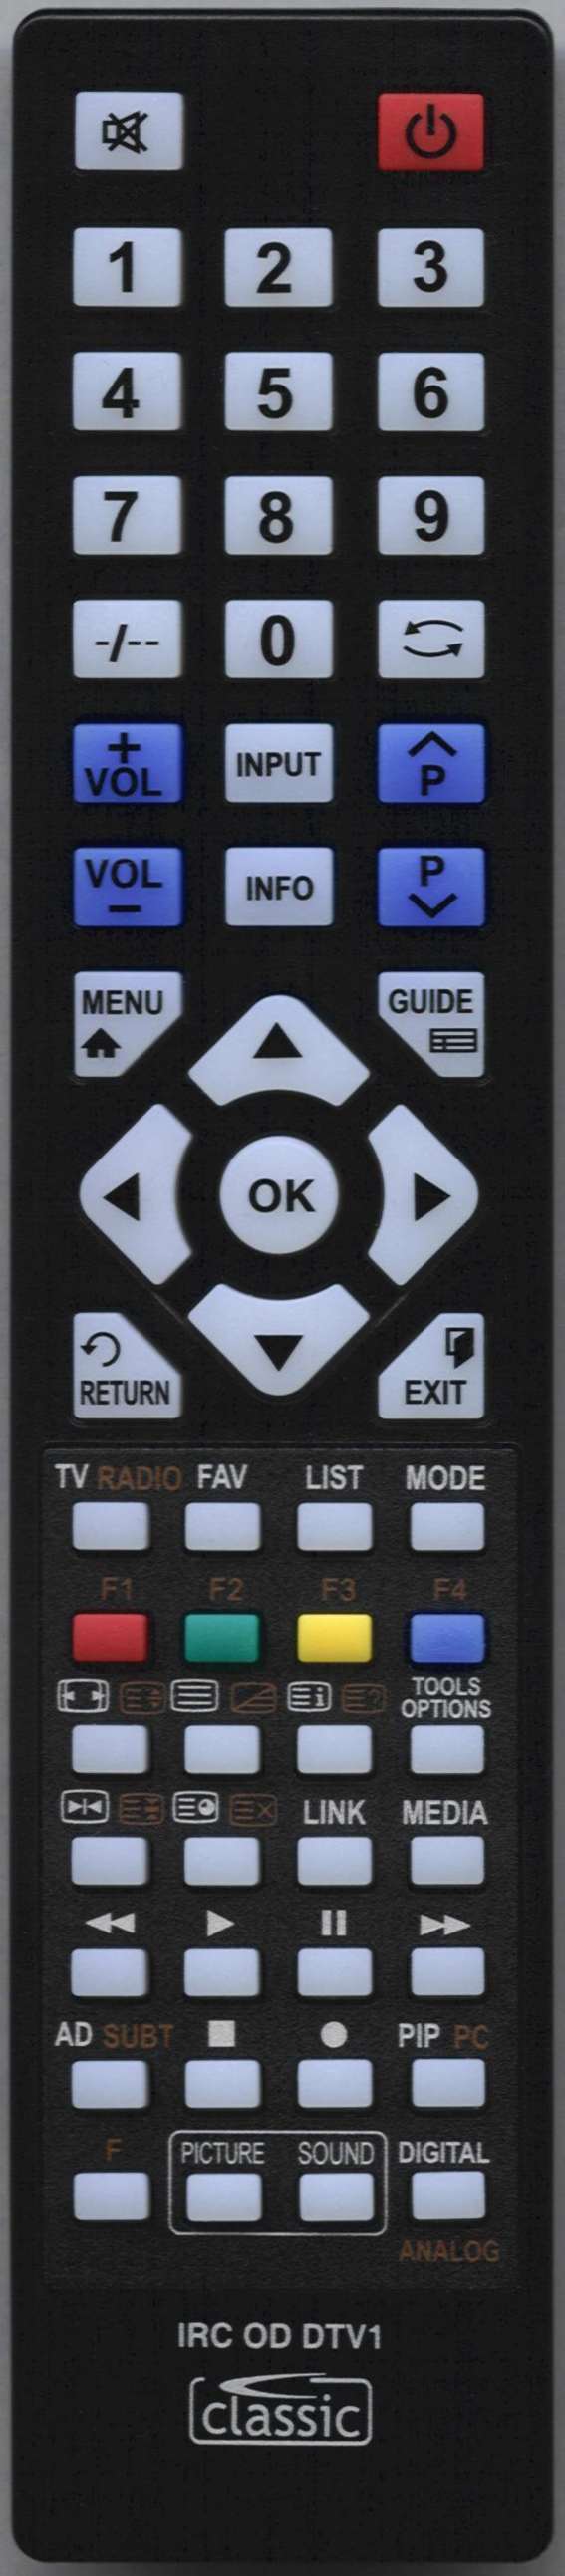 Digitrex CFD-2271 Remote Control